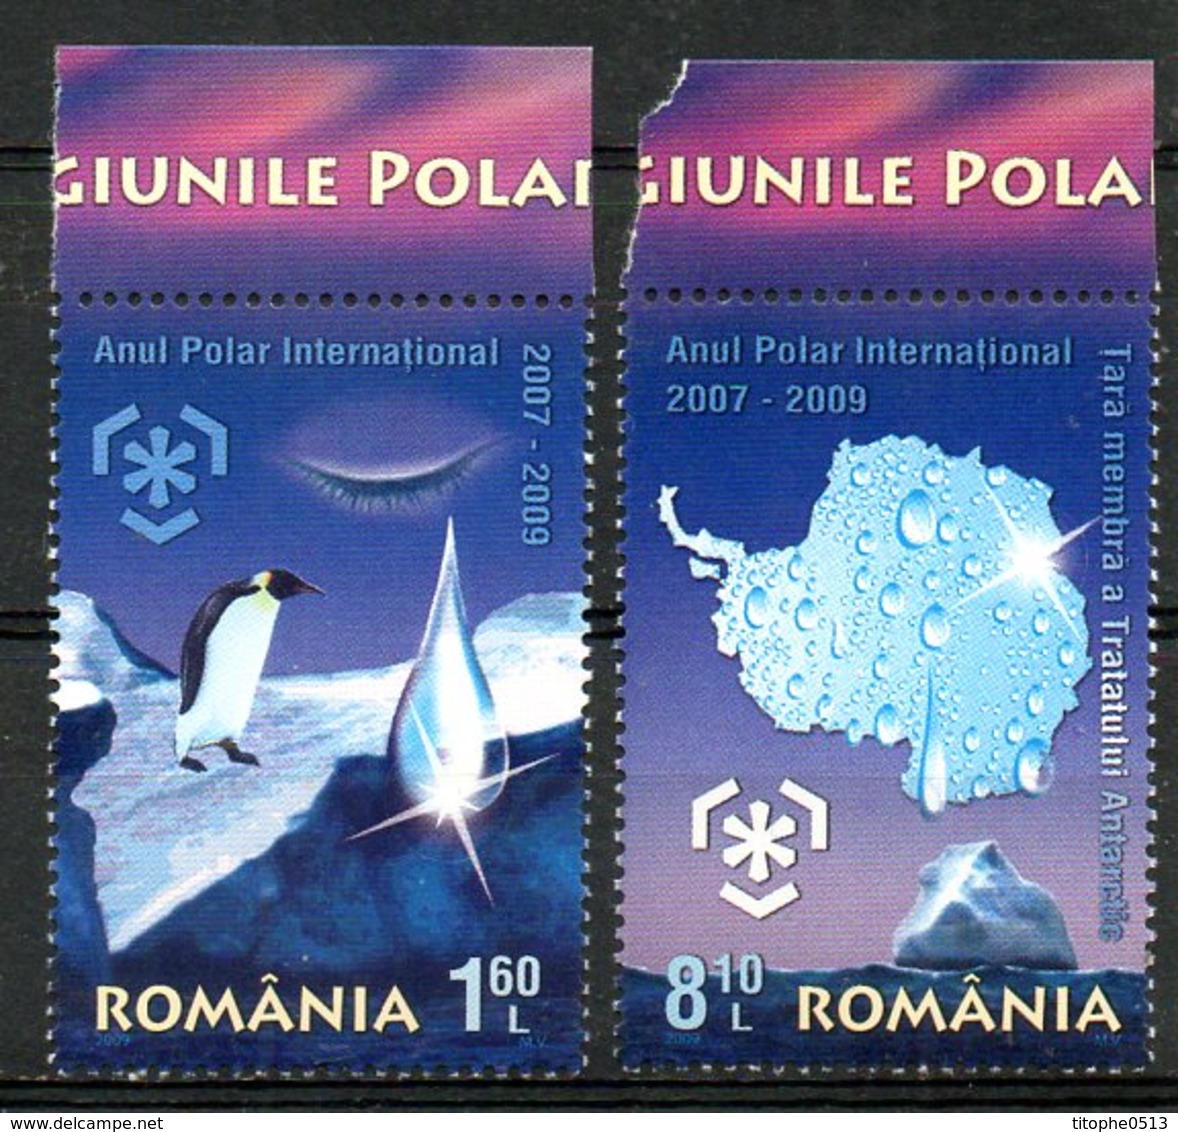 ROUMANIE. N°5399-5400 De 2009. Année Polaire Internationale. - Año Polar Internacional